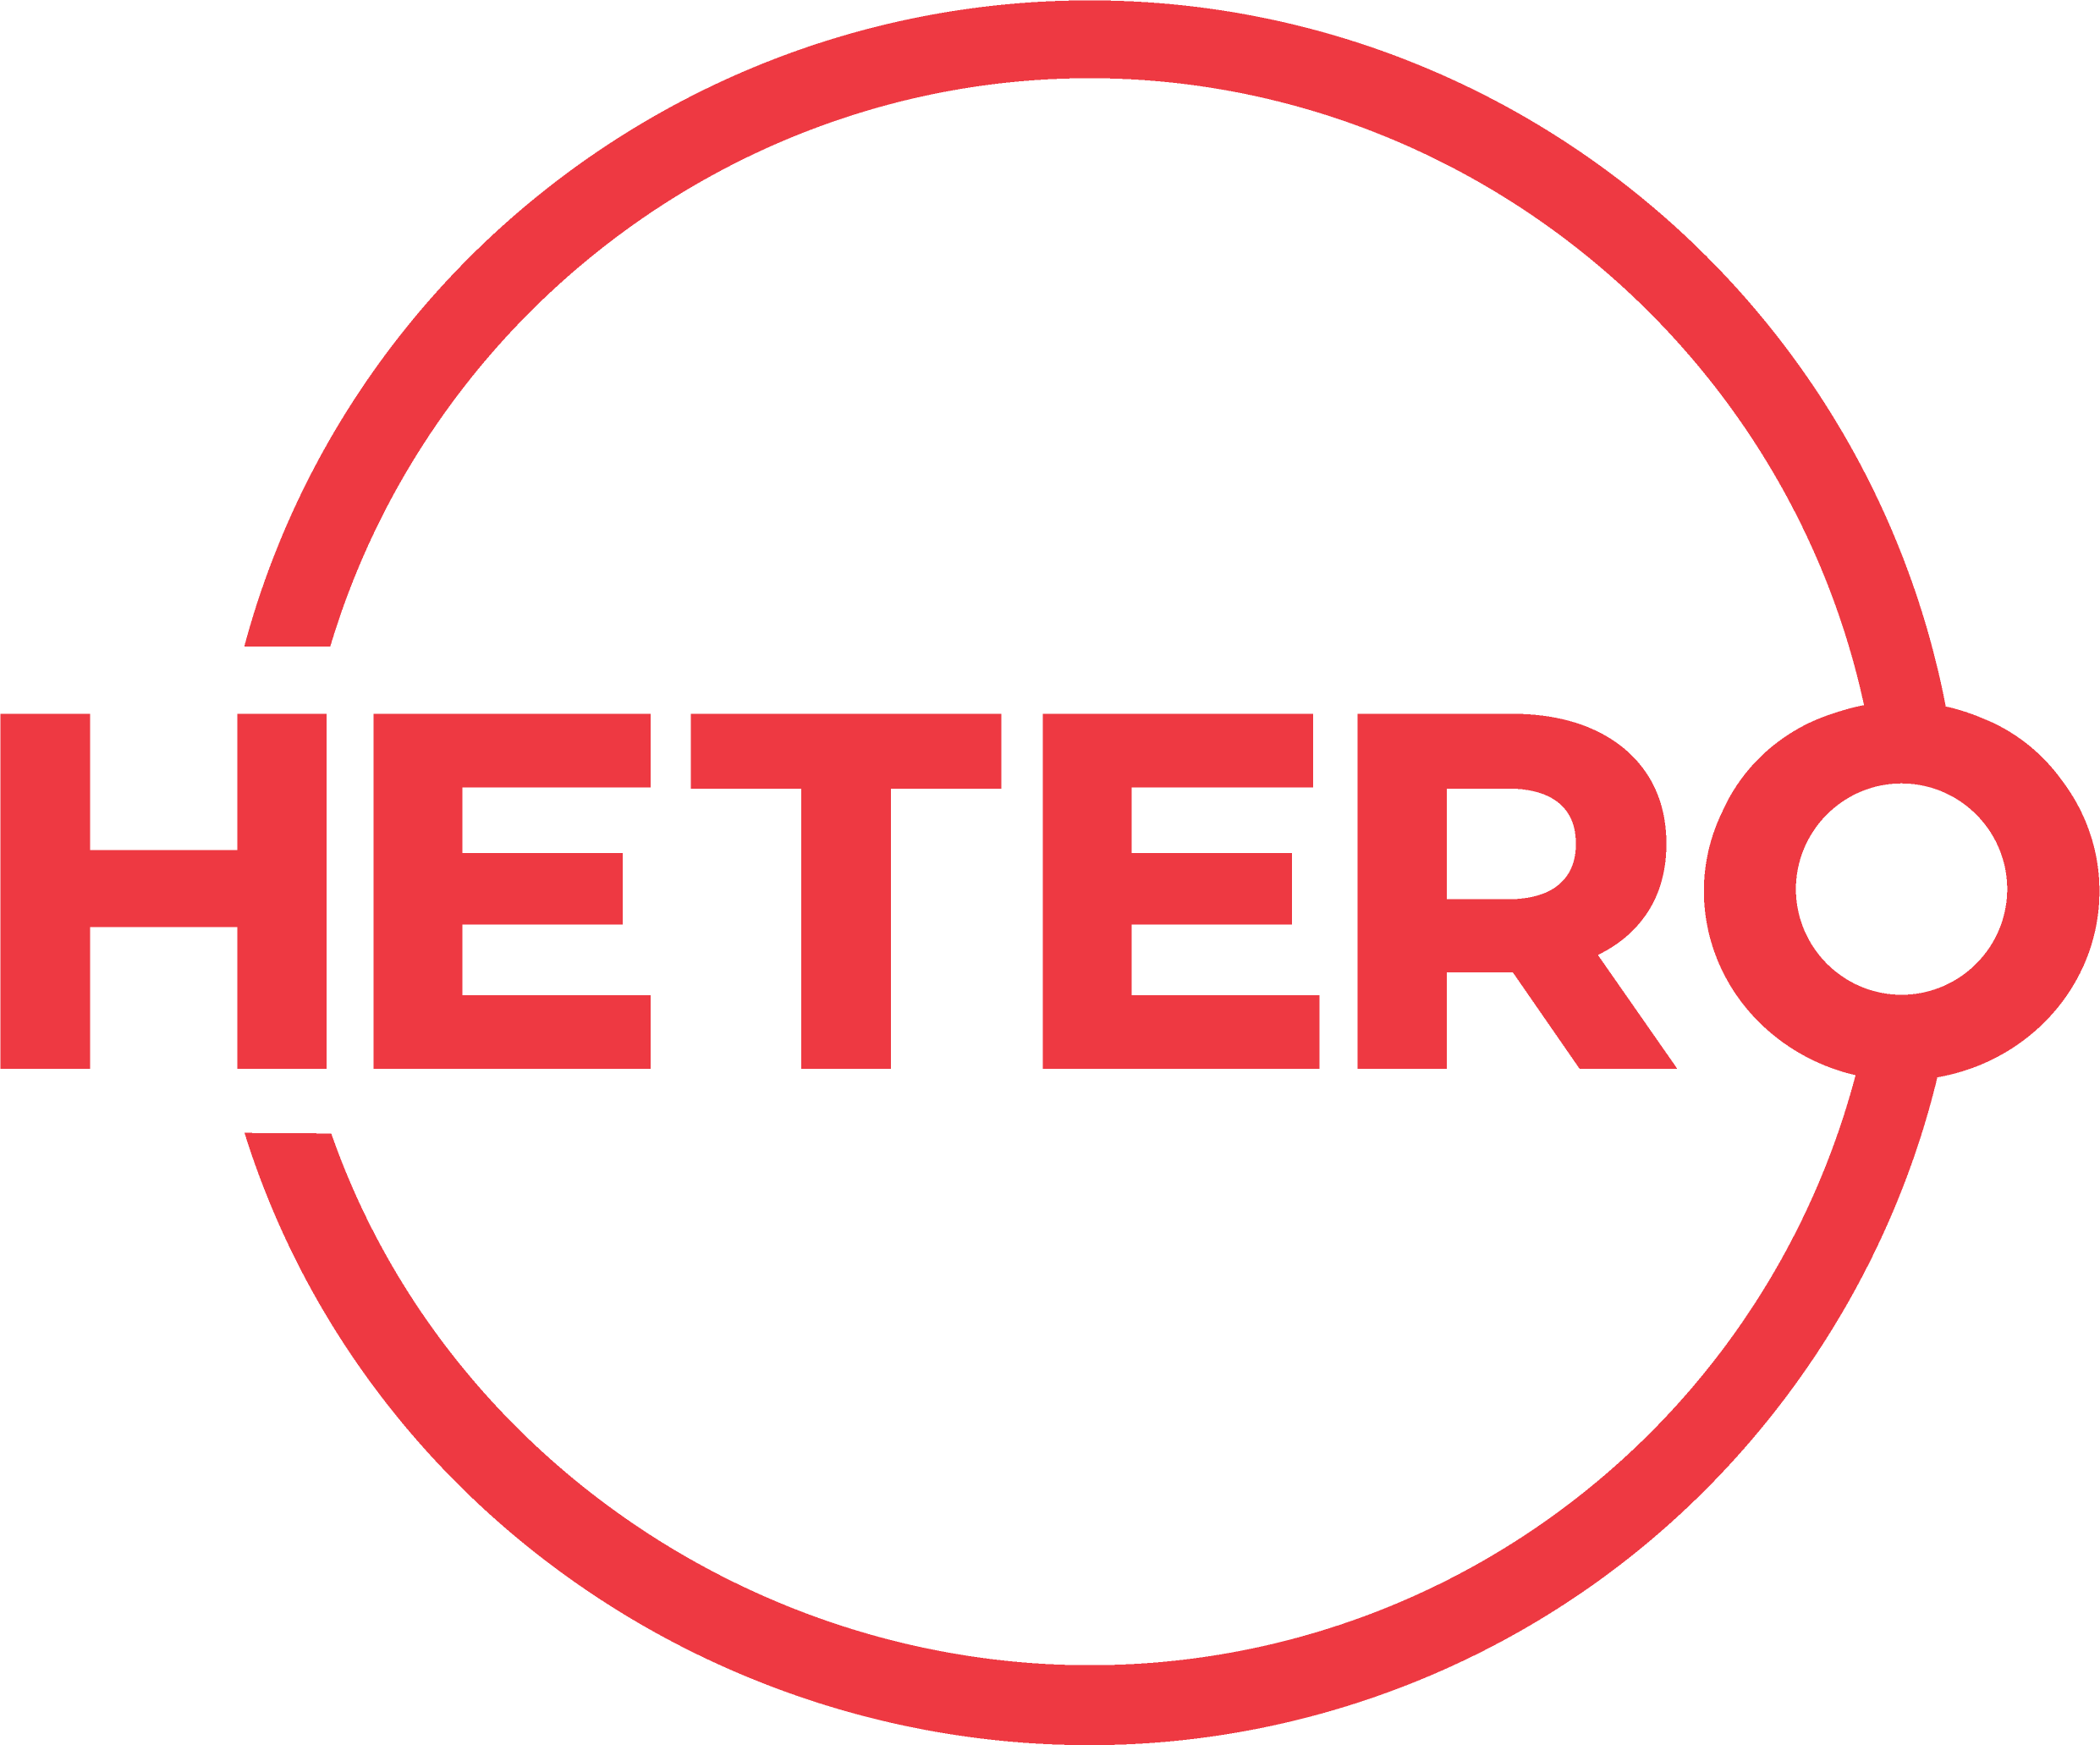 Hetero logo